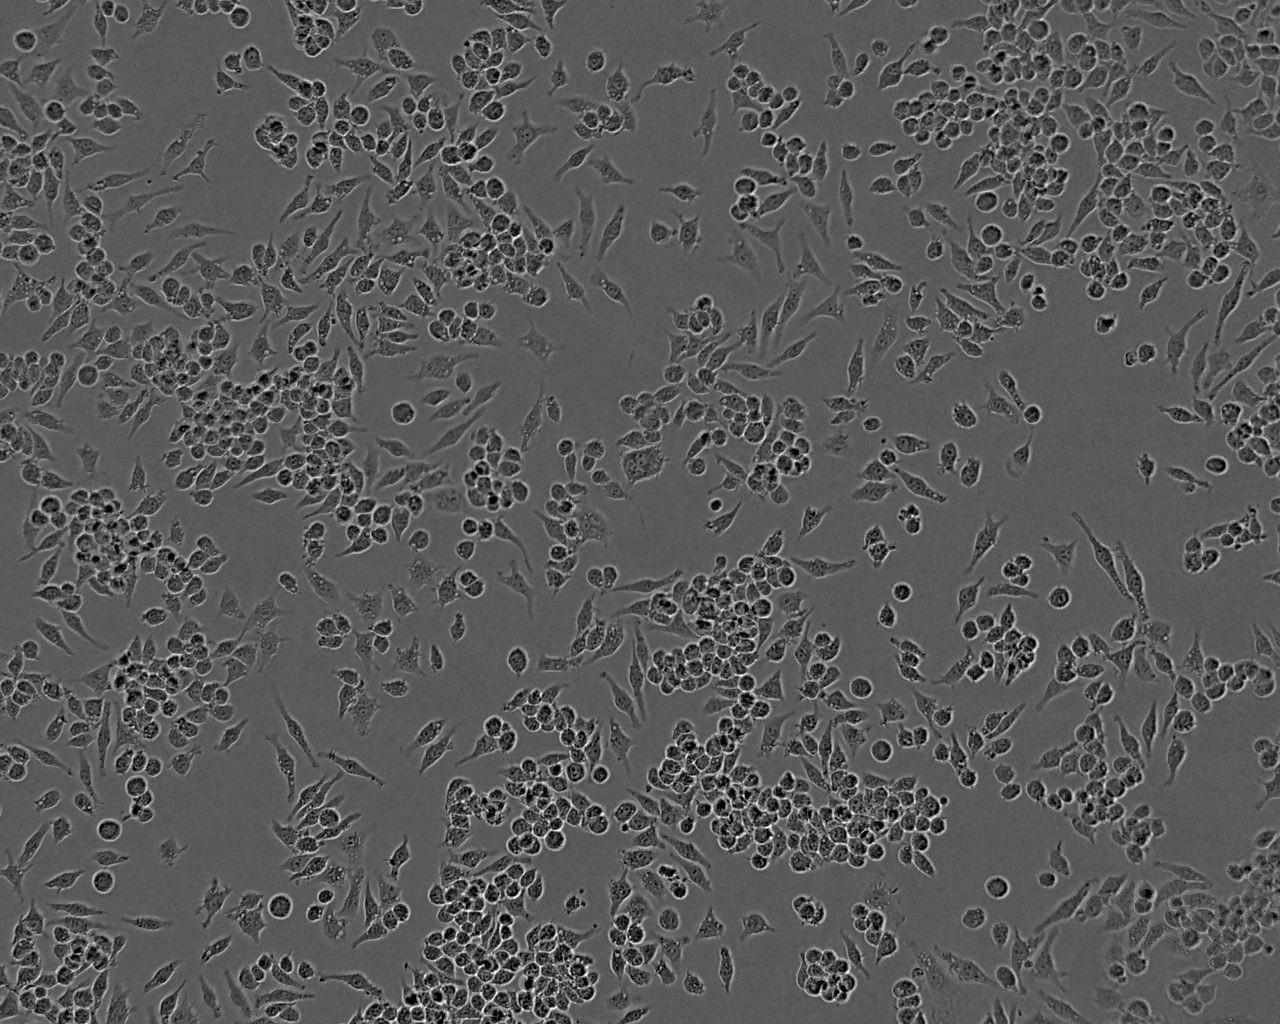 HCC9724 Cell:人肝癌细胞系,HCC9724 Cell